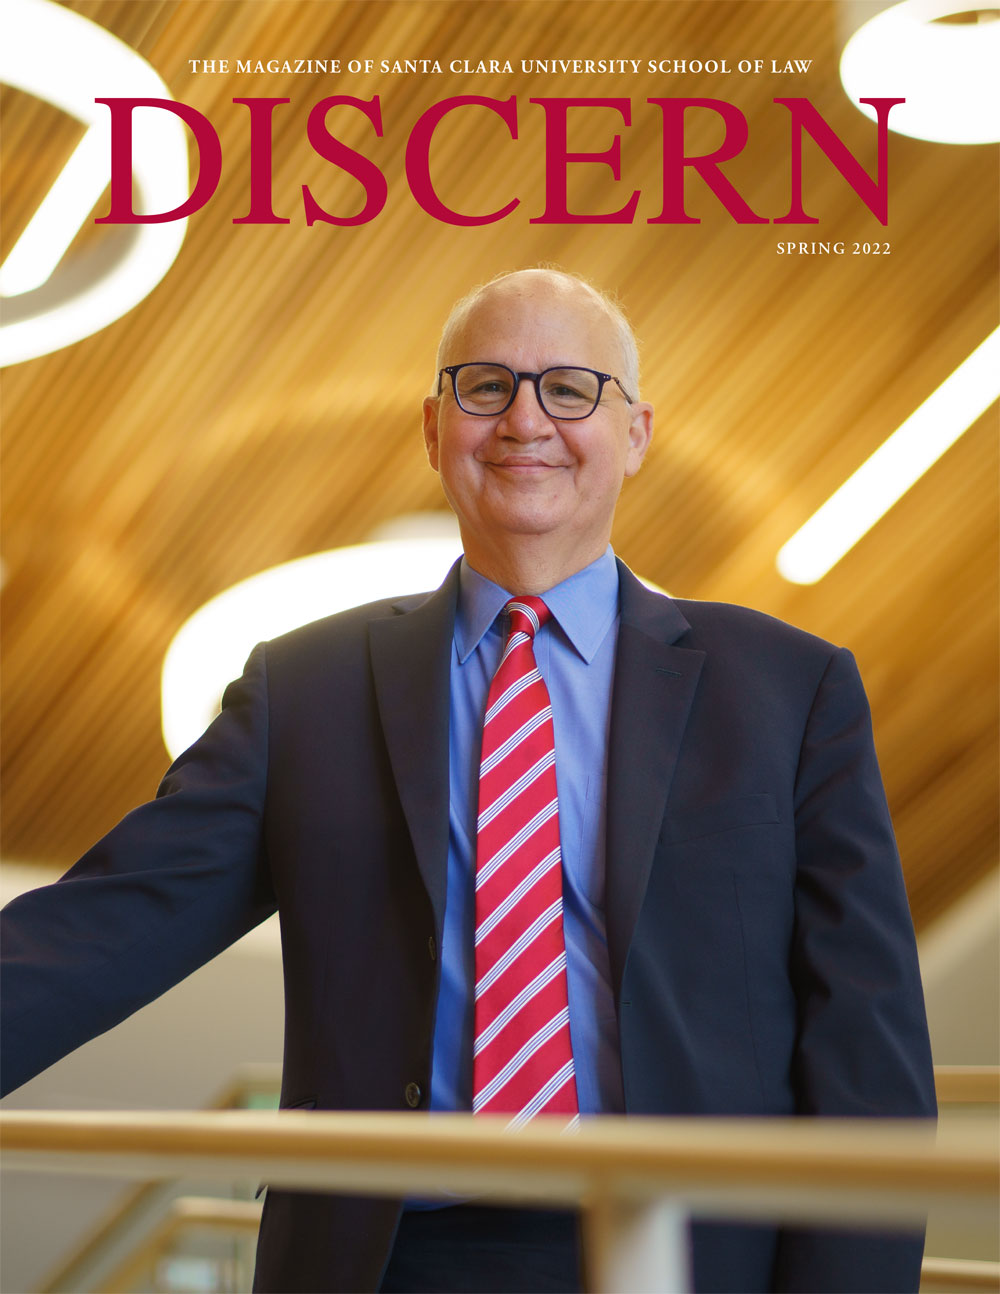 Santa Clara Law launches Discern, the new law school magazine